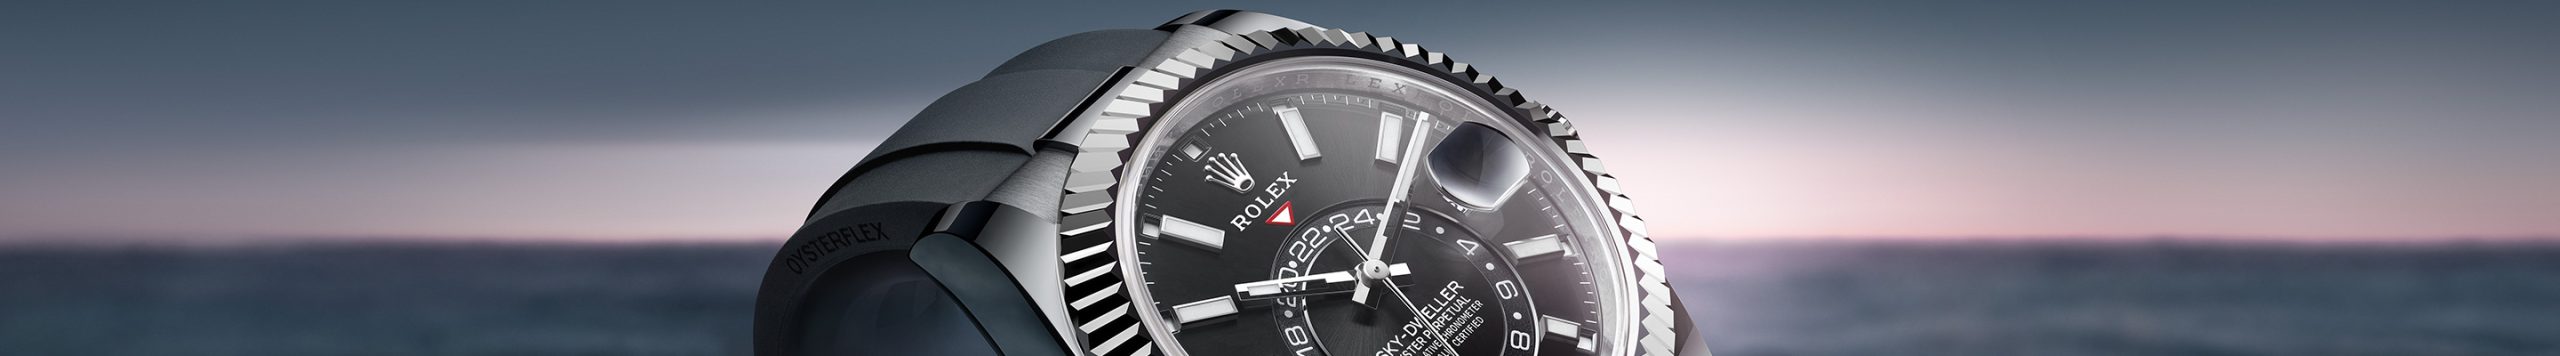 Rolex Sky-Dweller | Rolex Official Retailer - The Time Place Singapore